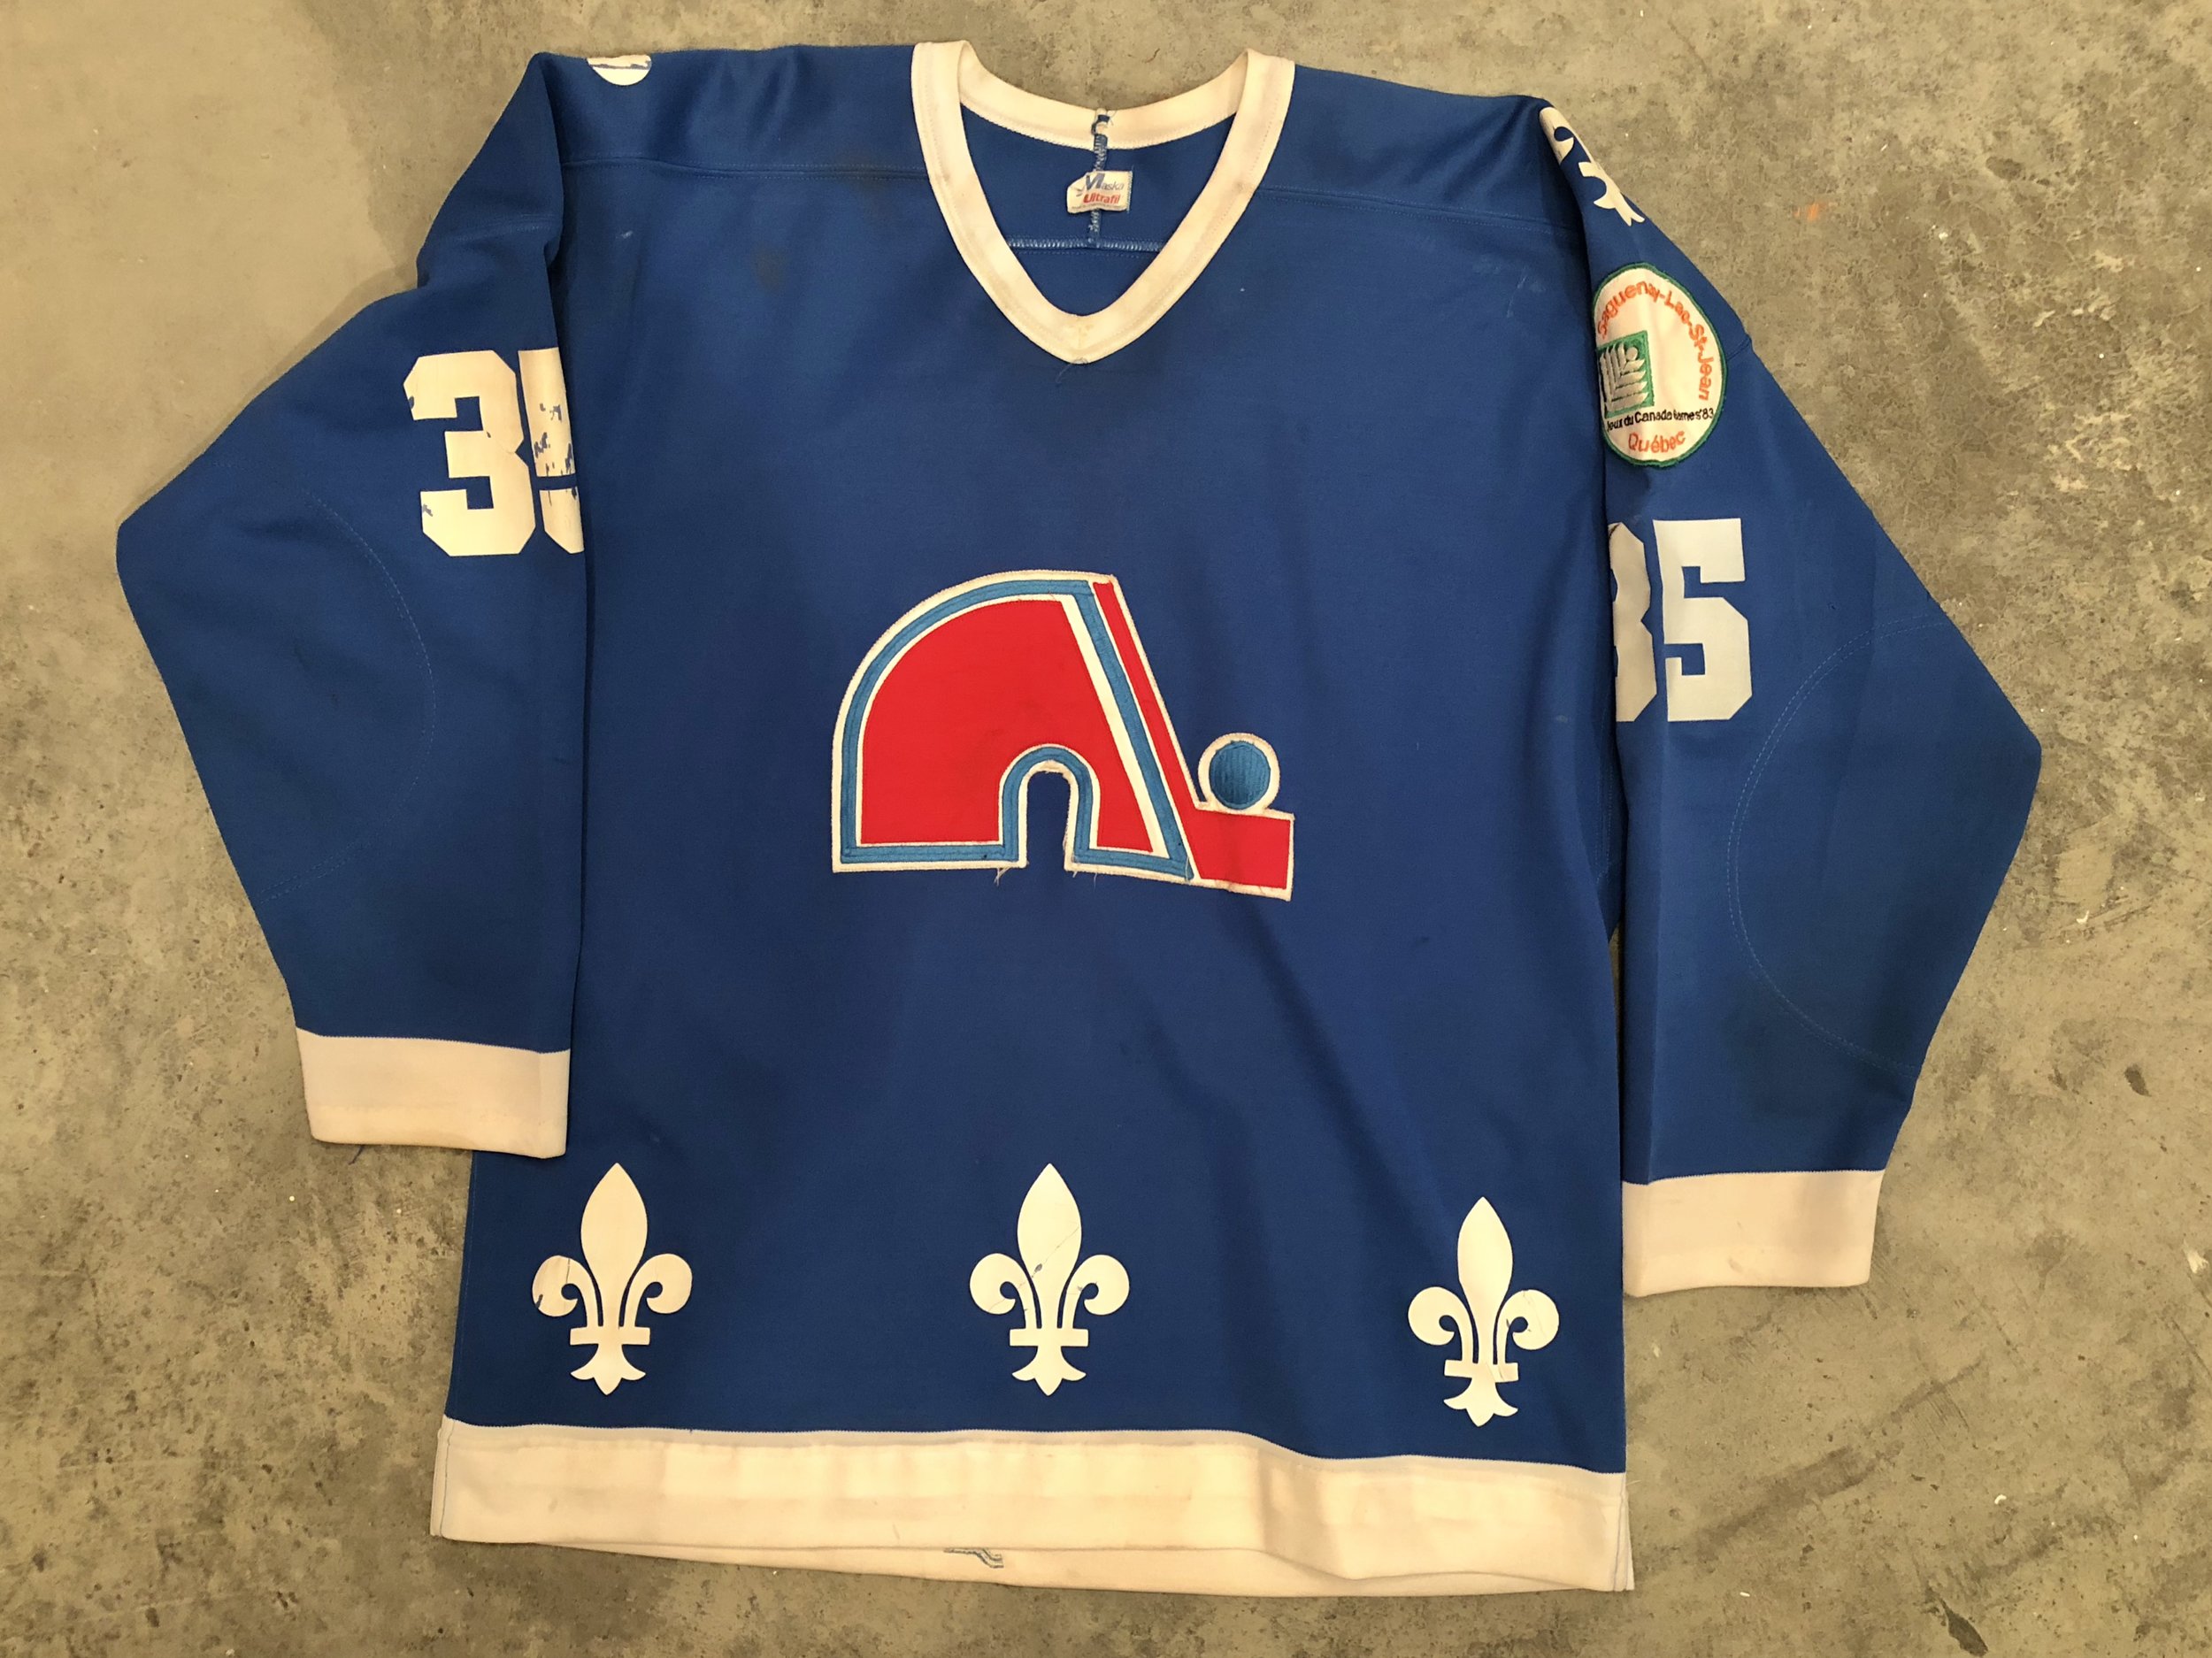 Quebec Nordiques Game Worn Jerseys